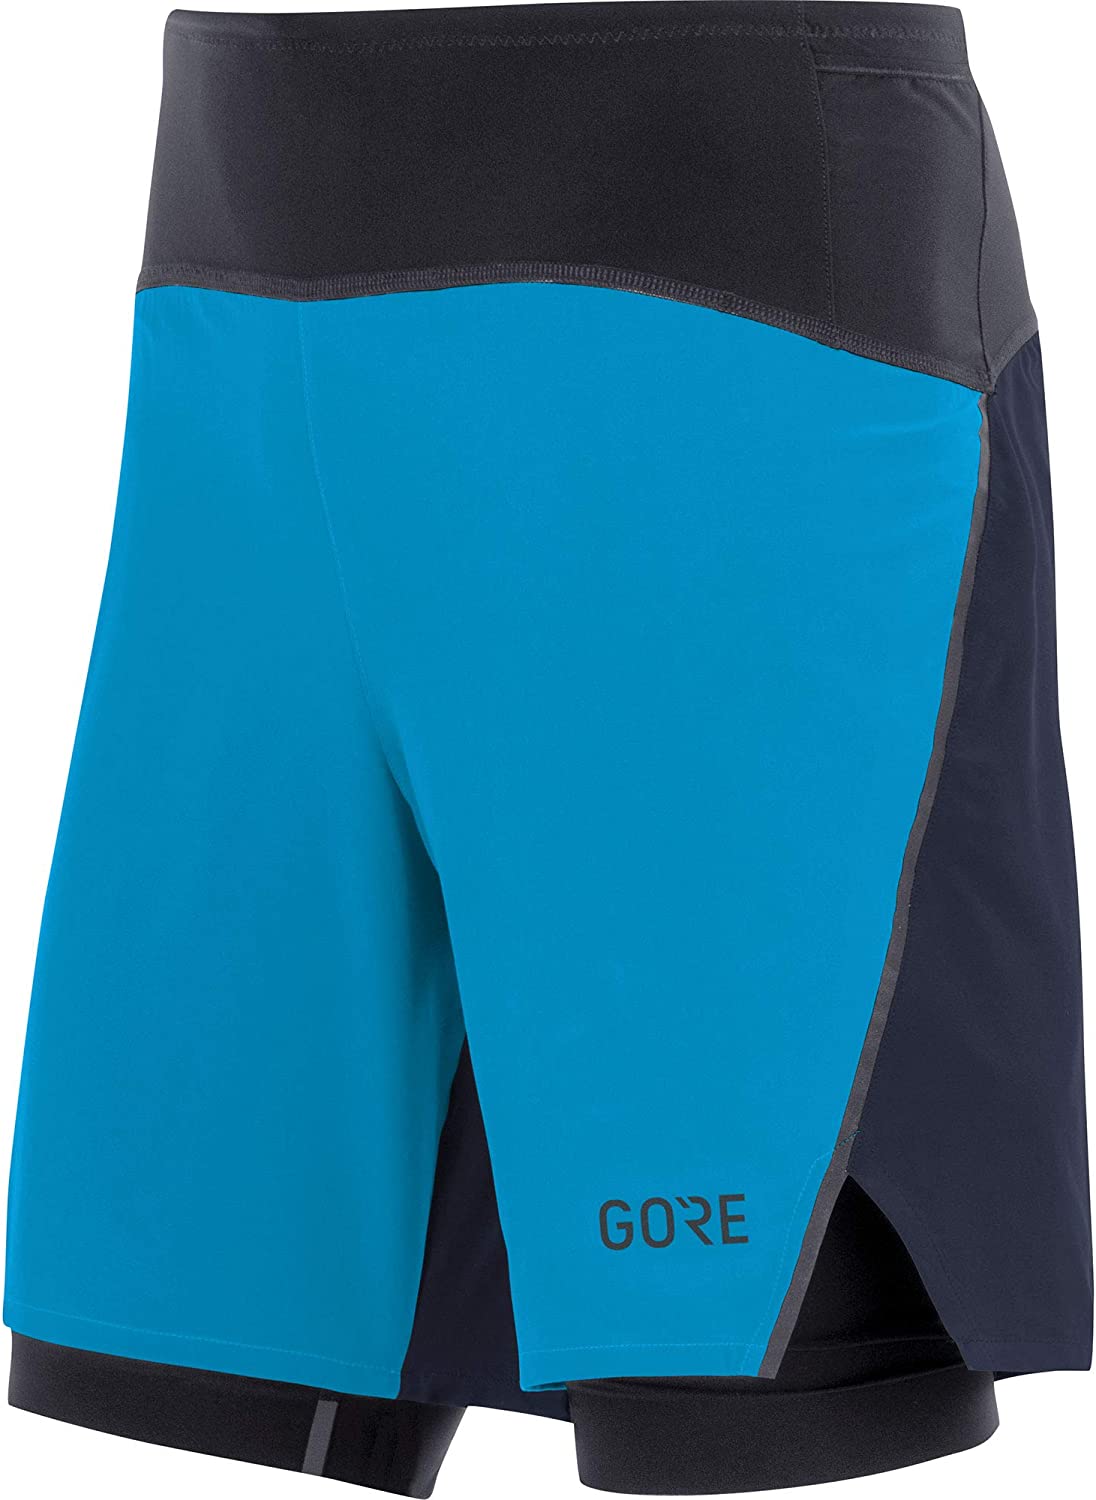 Gore Wear - R7 2In1 Shorts - Running shorts - Men's